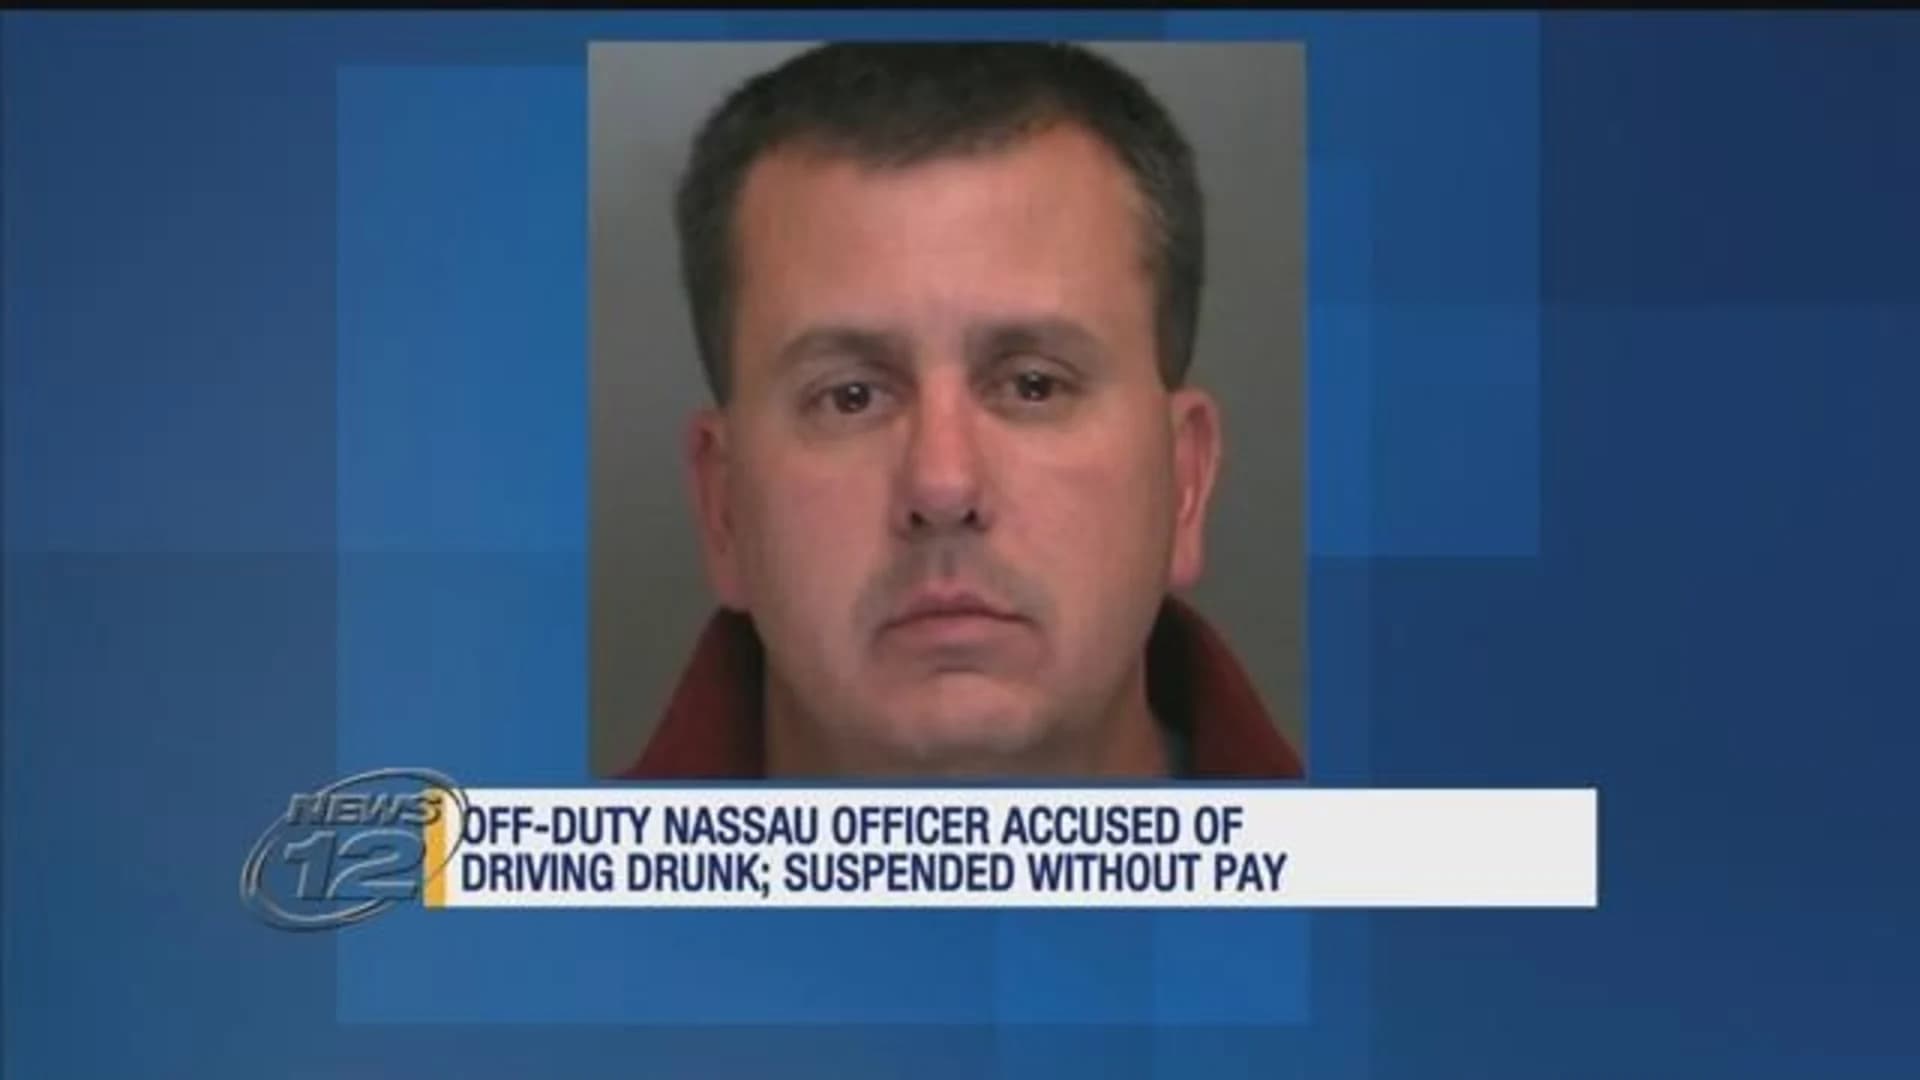 Off-duty Nassau officer suspended for allegedly driving drunk